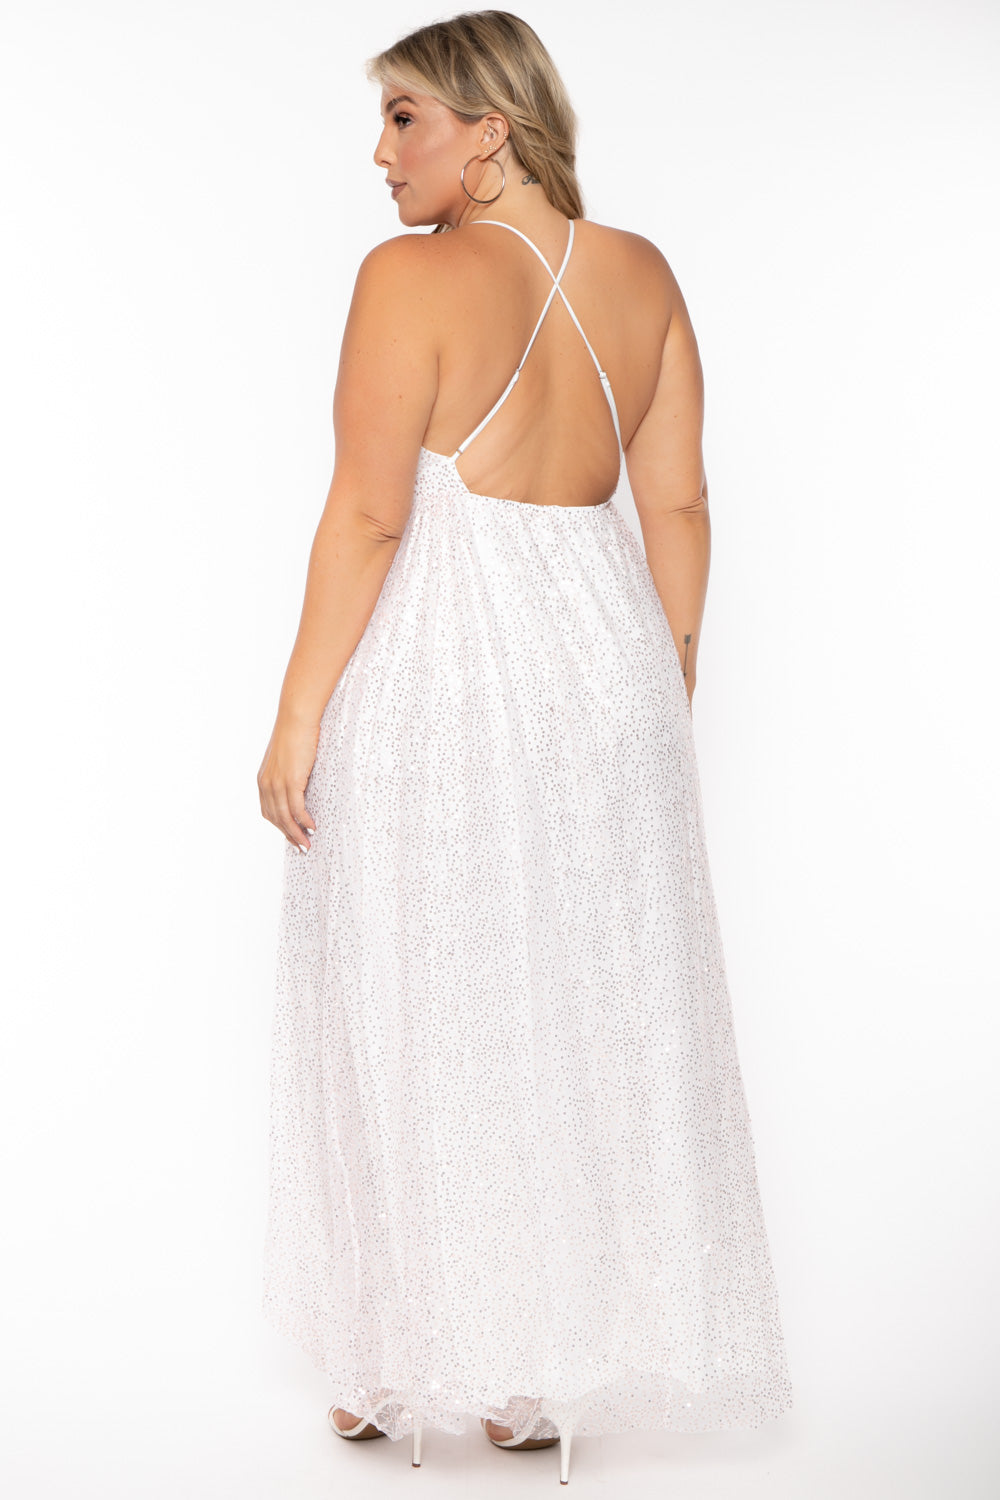 SYMPHONY Dresses Plus Size Anaira Maxi Glitter Dress - White